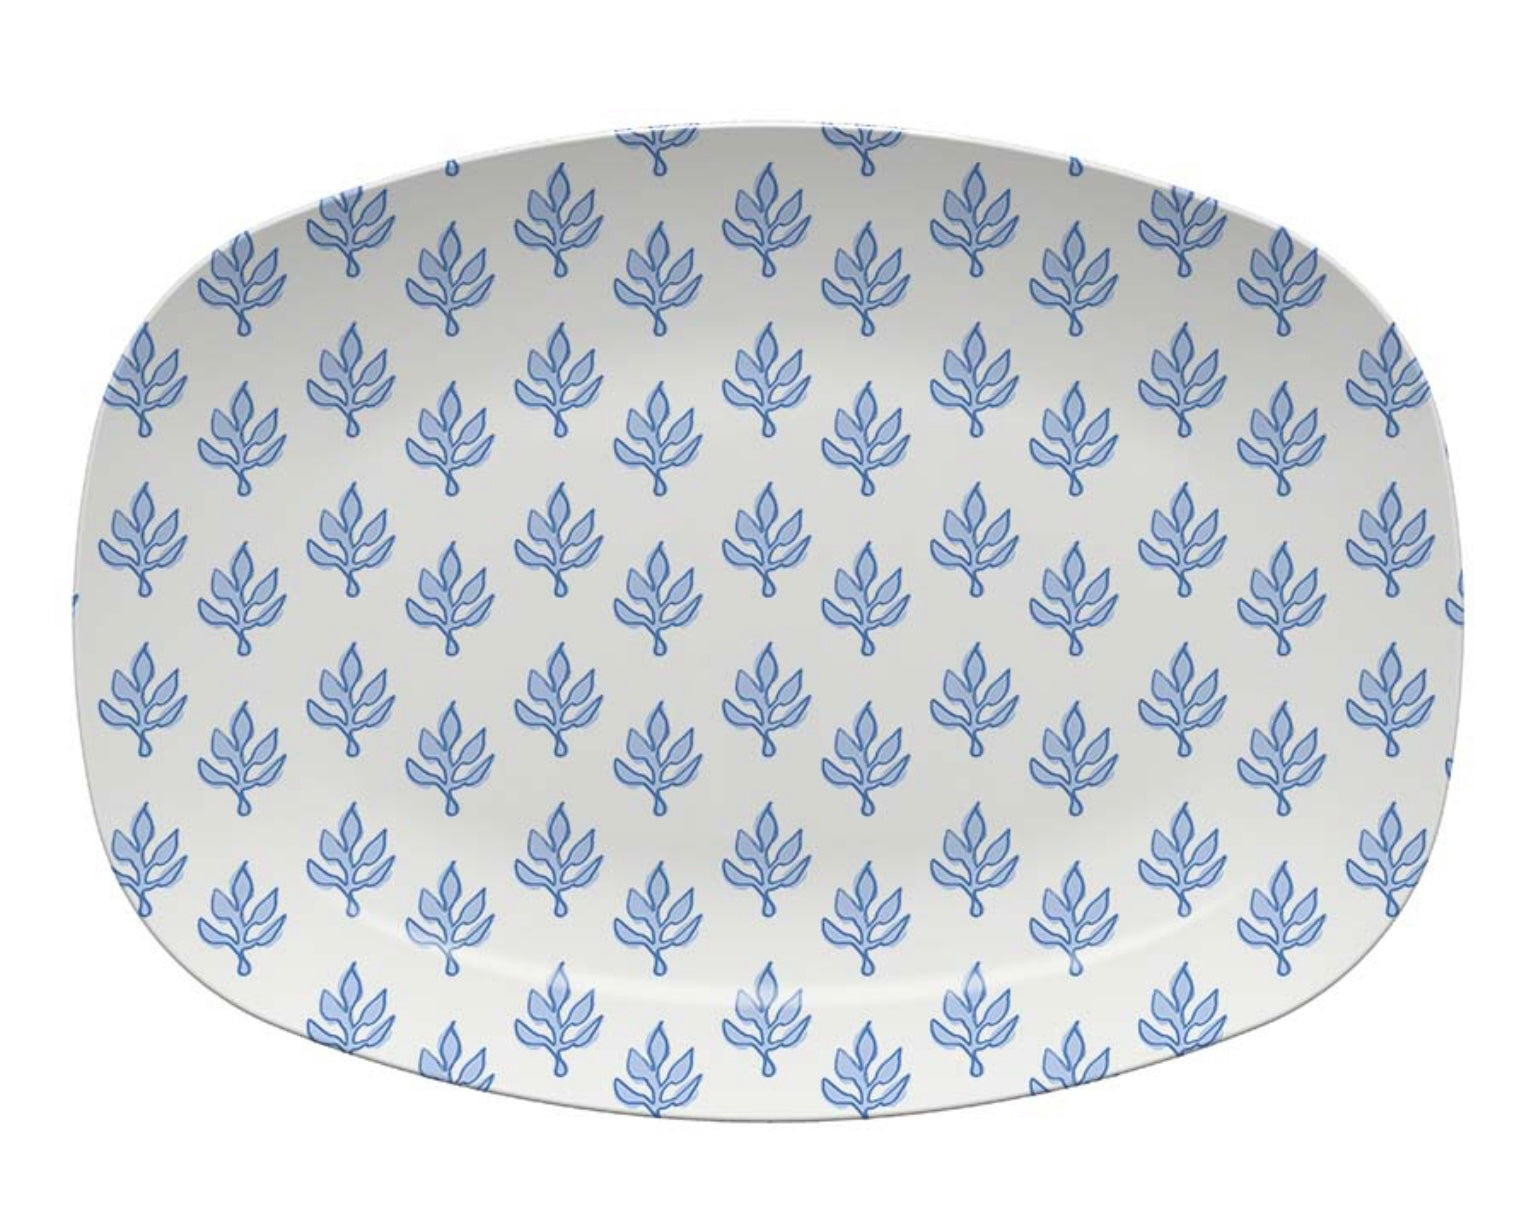 ClaireBella Flora French Blue Melamine Platter